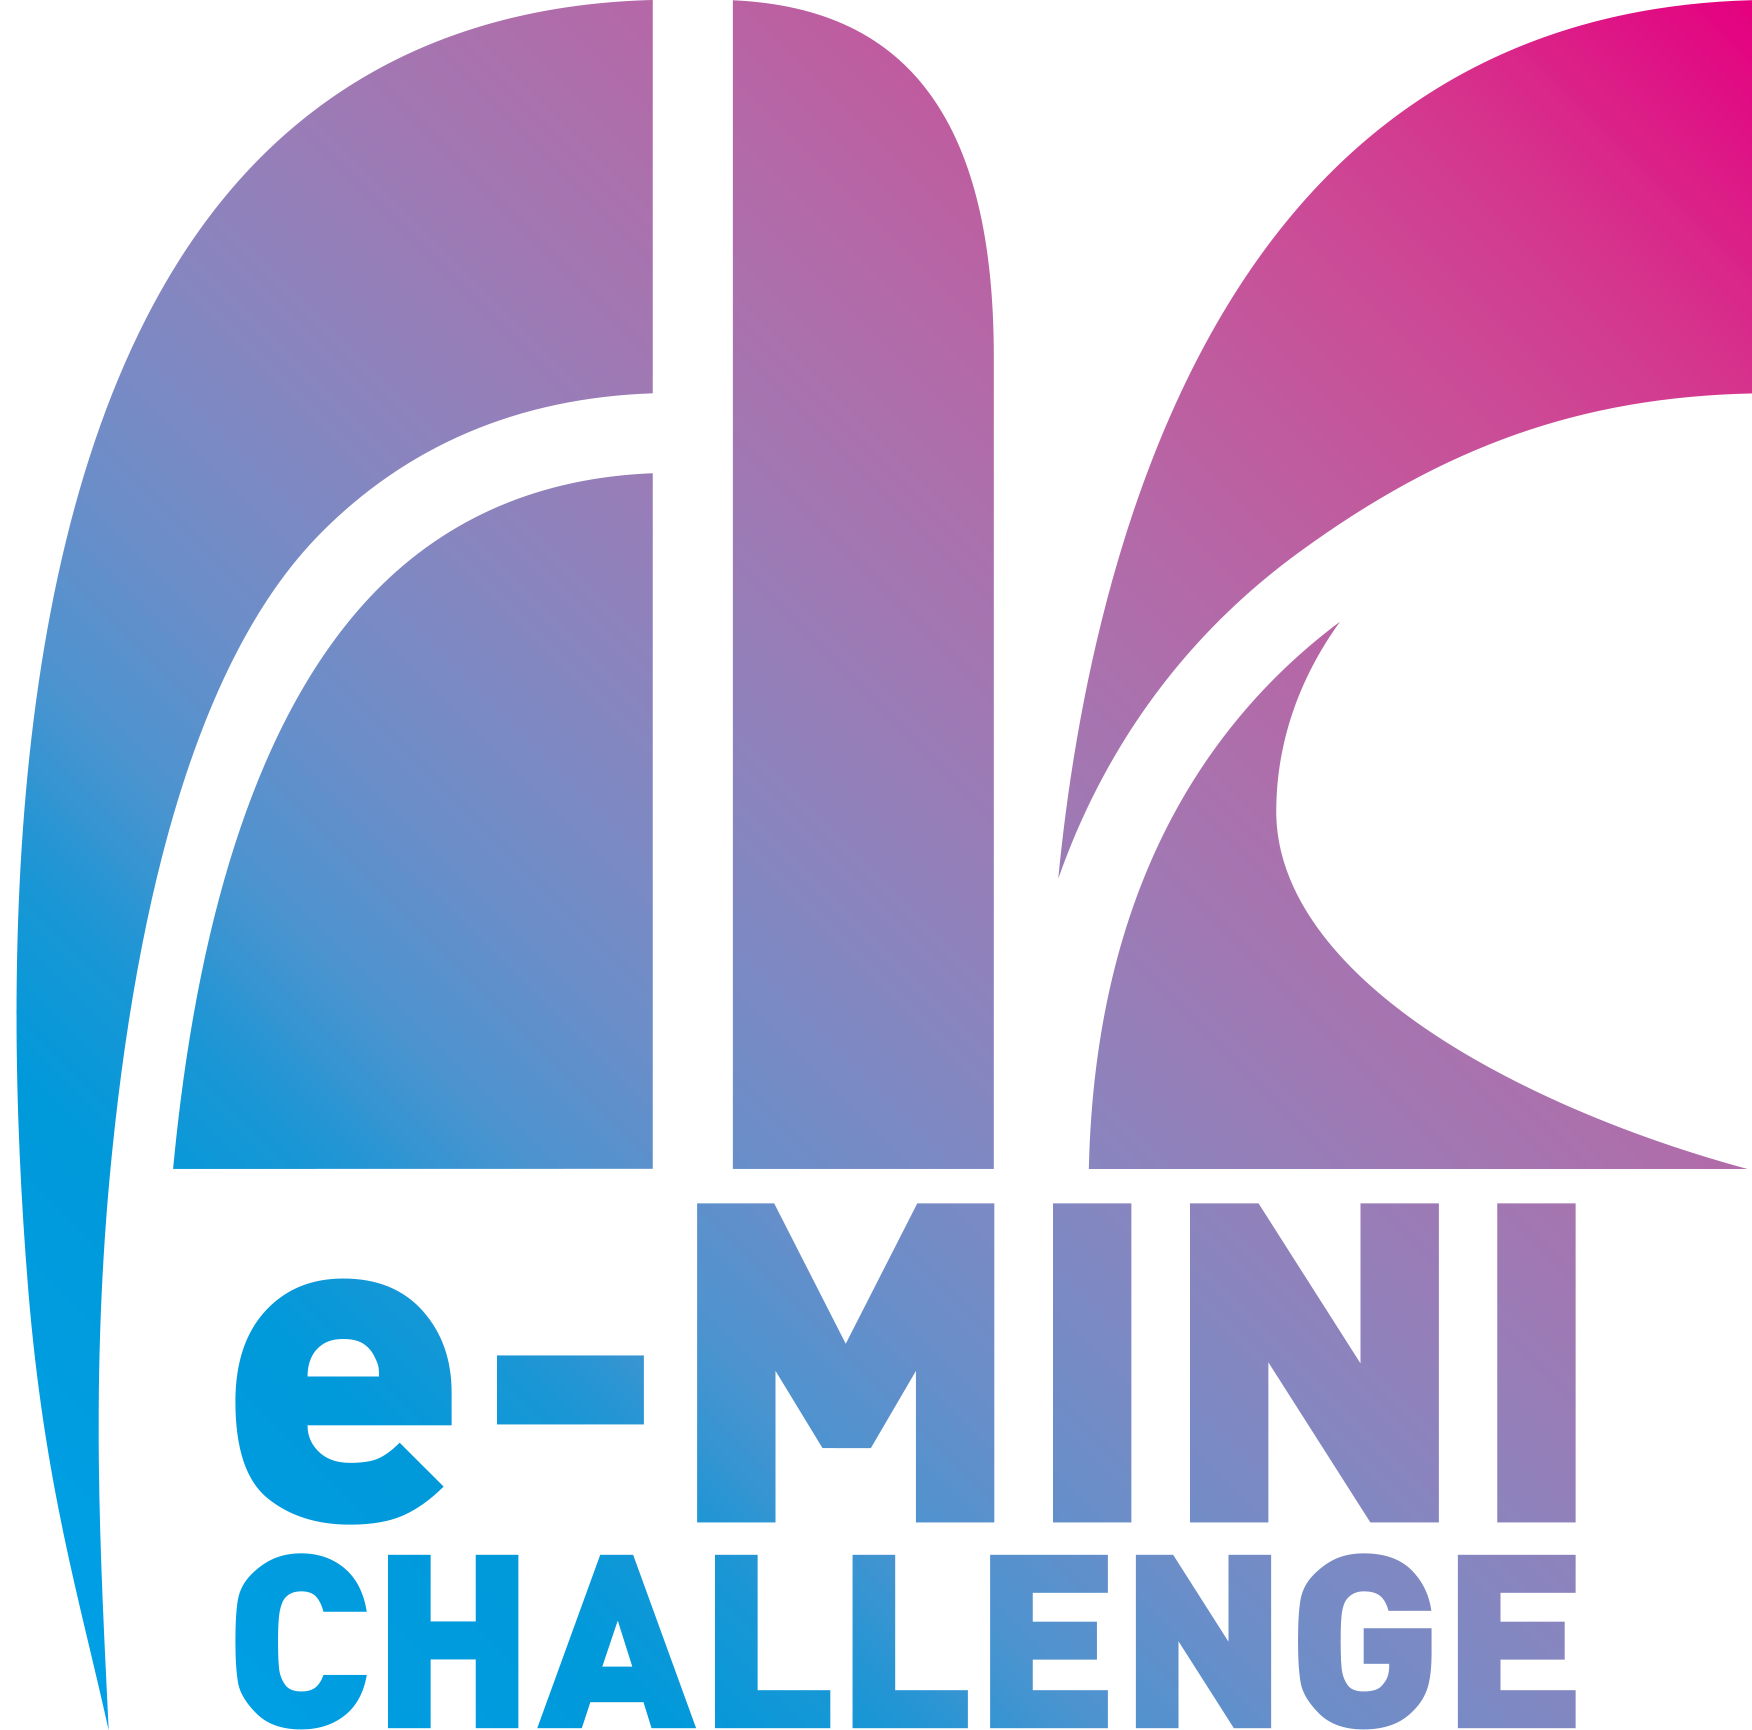 e-MINI CHALLENGE® 2021 S1 Rd.5 A/B ポイントランキング公開